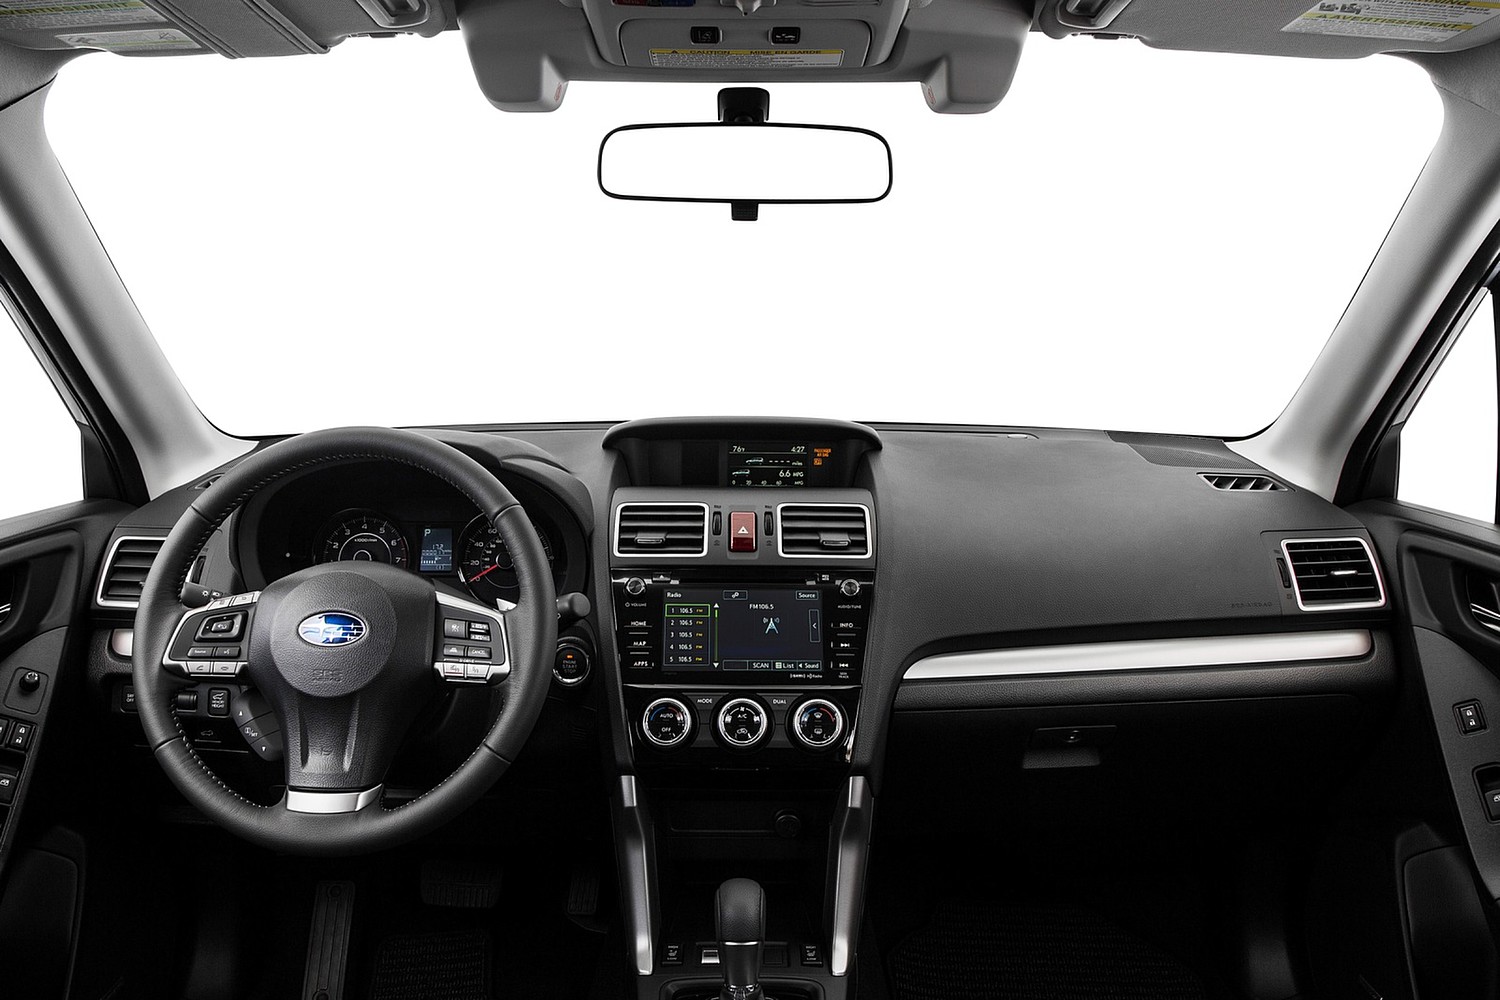 Subaru Forester 2.0XT Touring 4dr SUV Dashboard Shown (2015 model year shown)